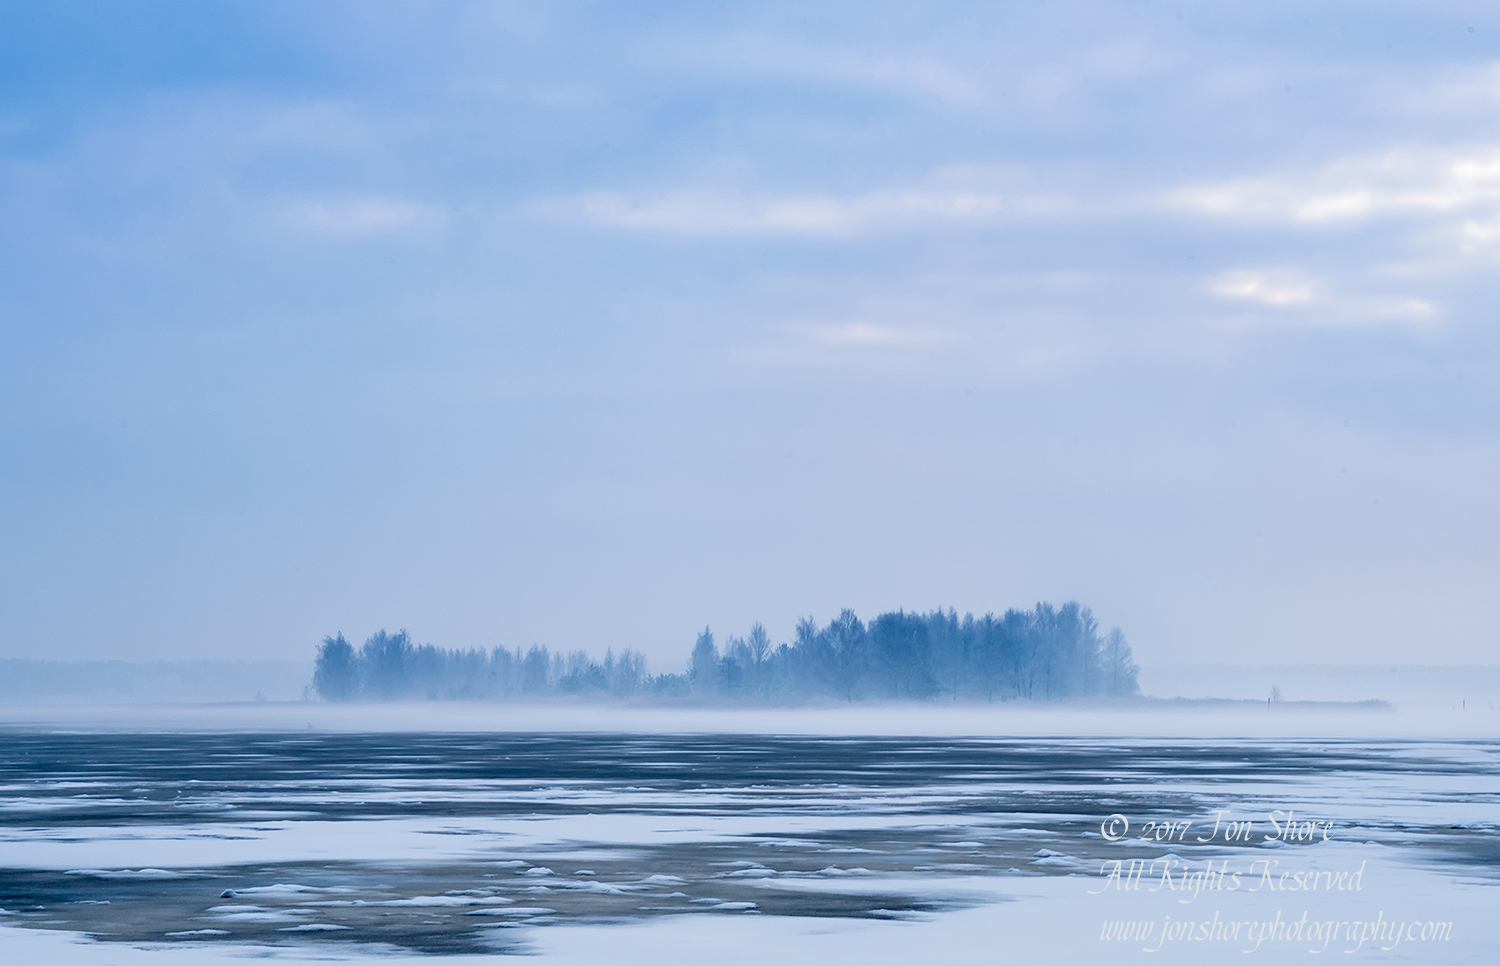 Frozen Lielupe River in Latvia. Nikkor 300mm